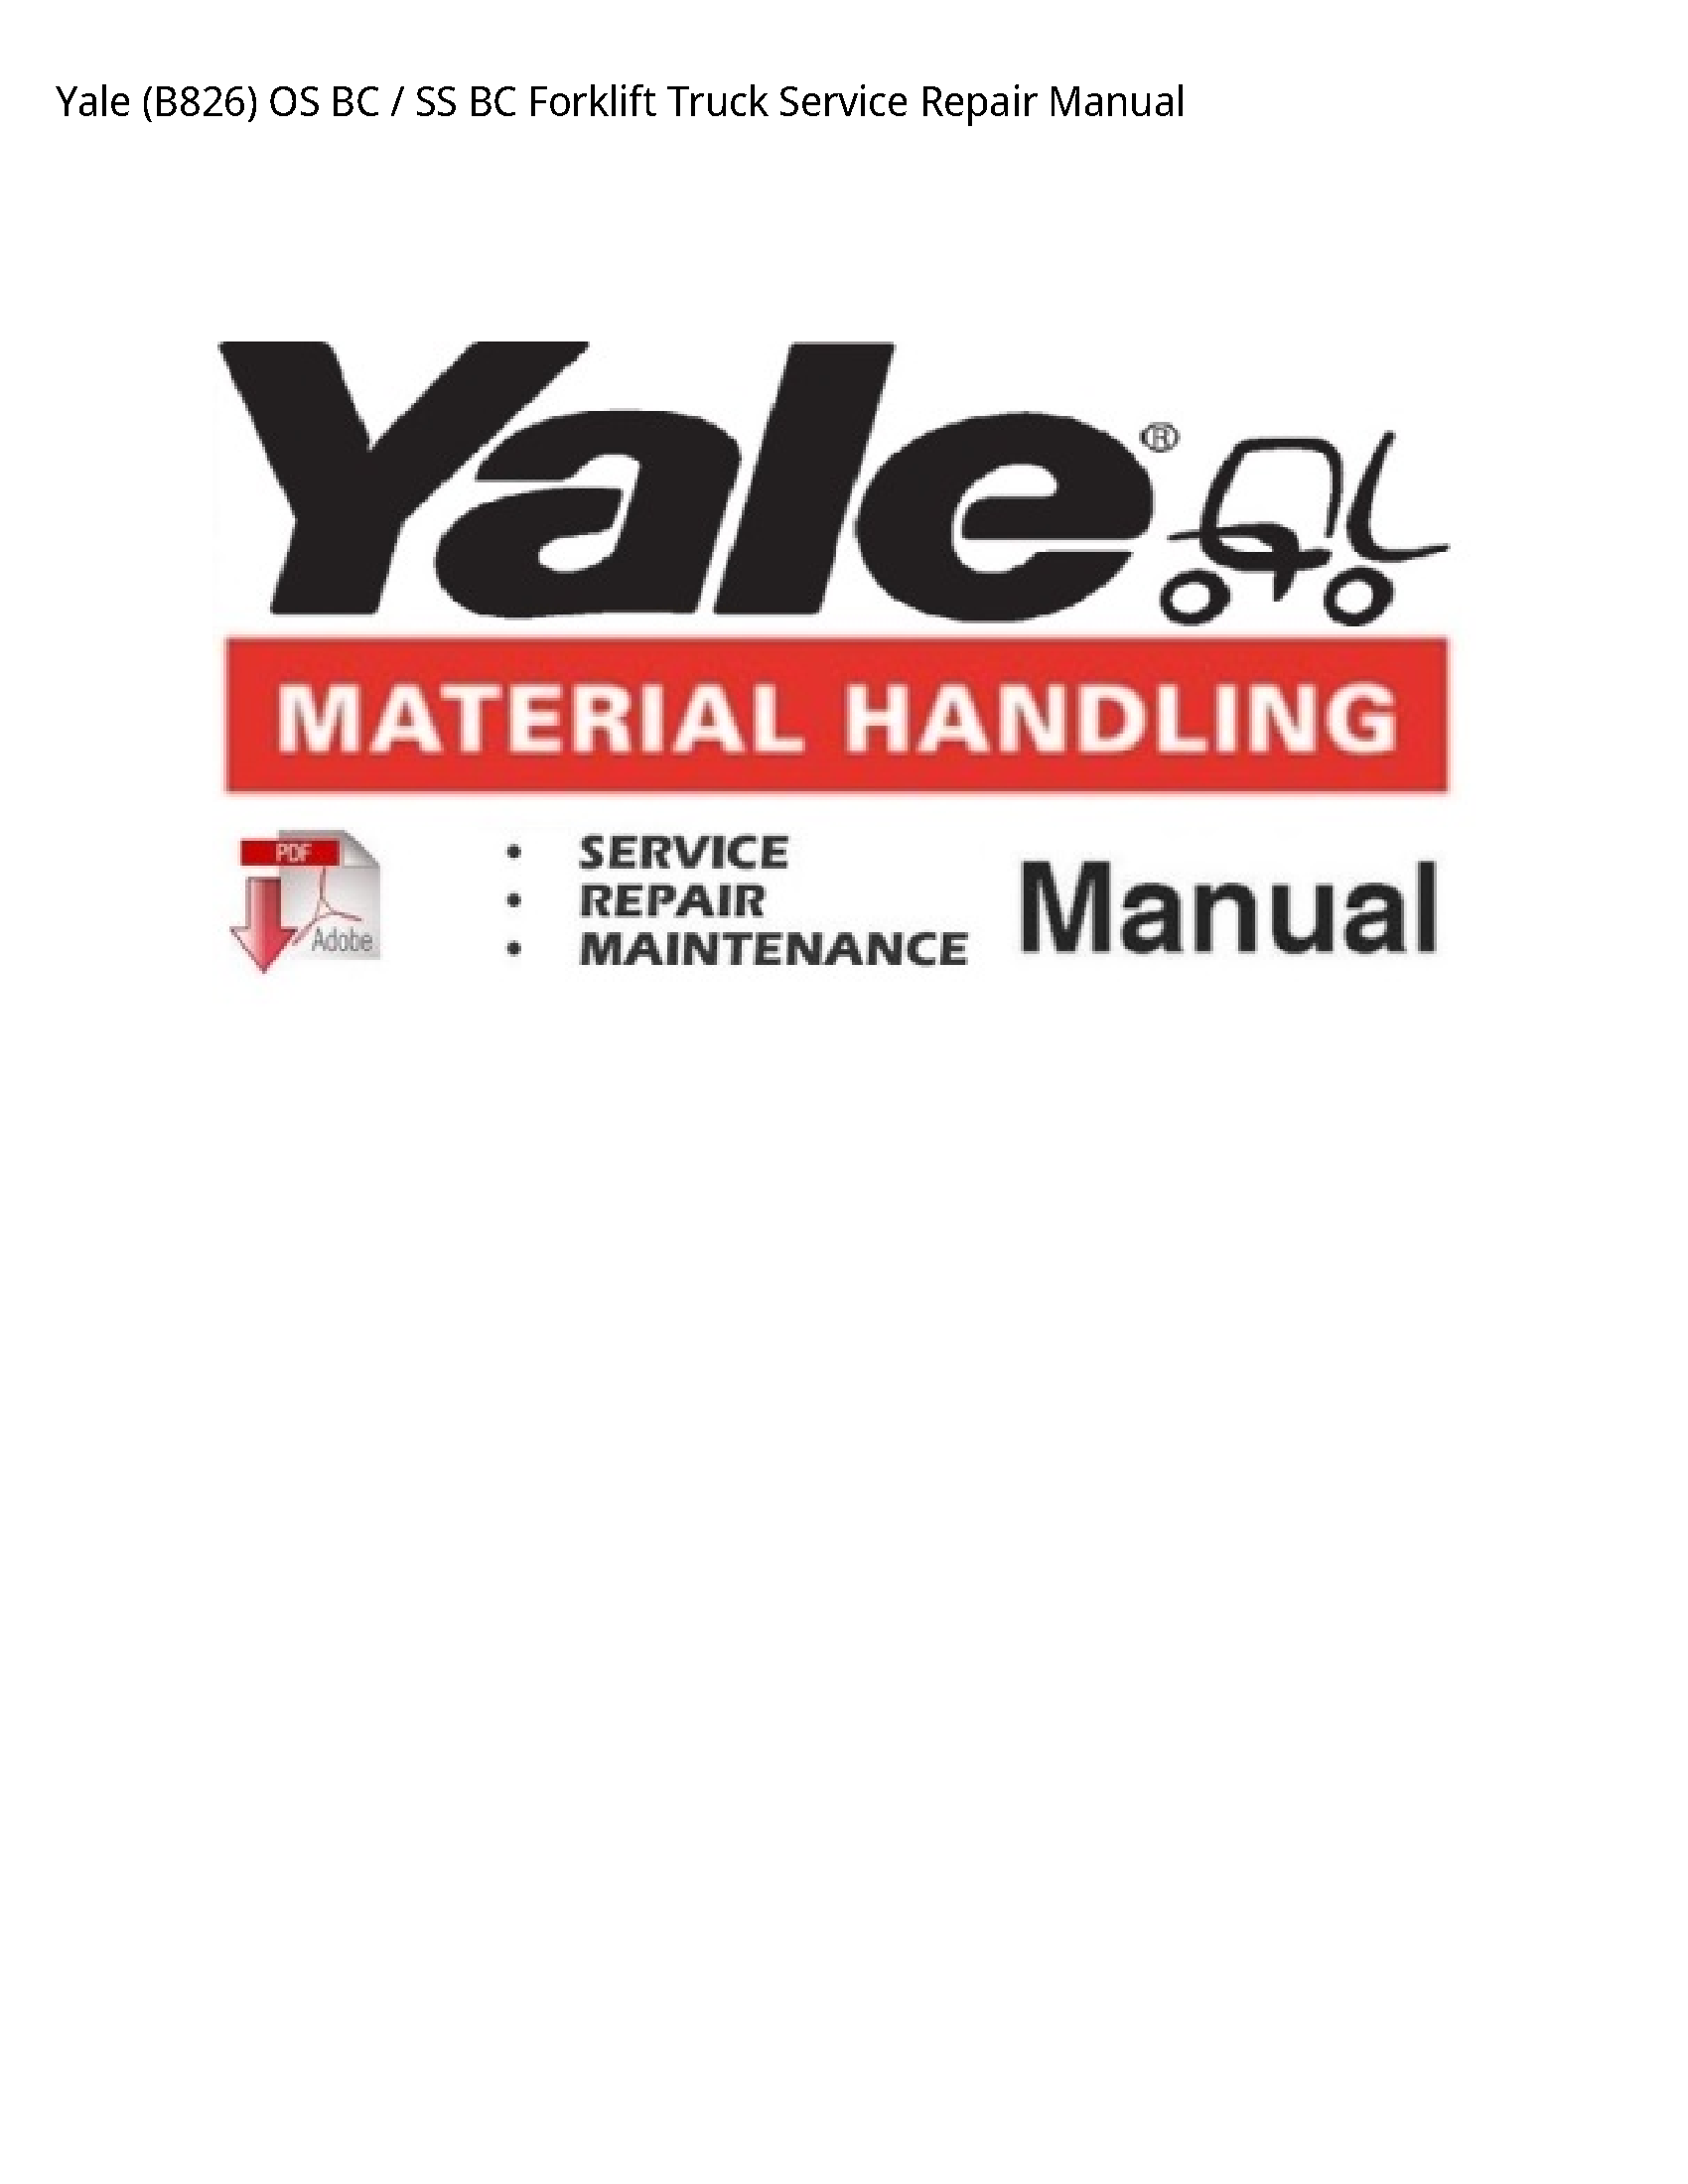 Yale (B826) OS BC SS BC Forklift Truck manual